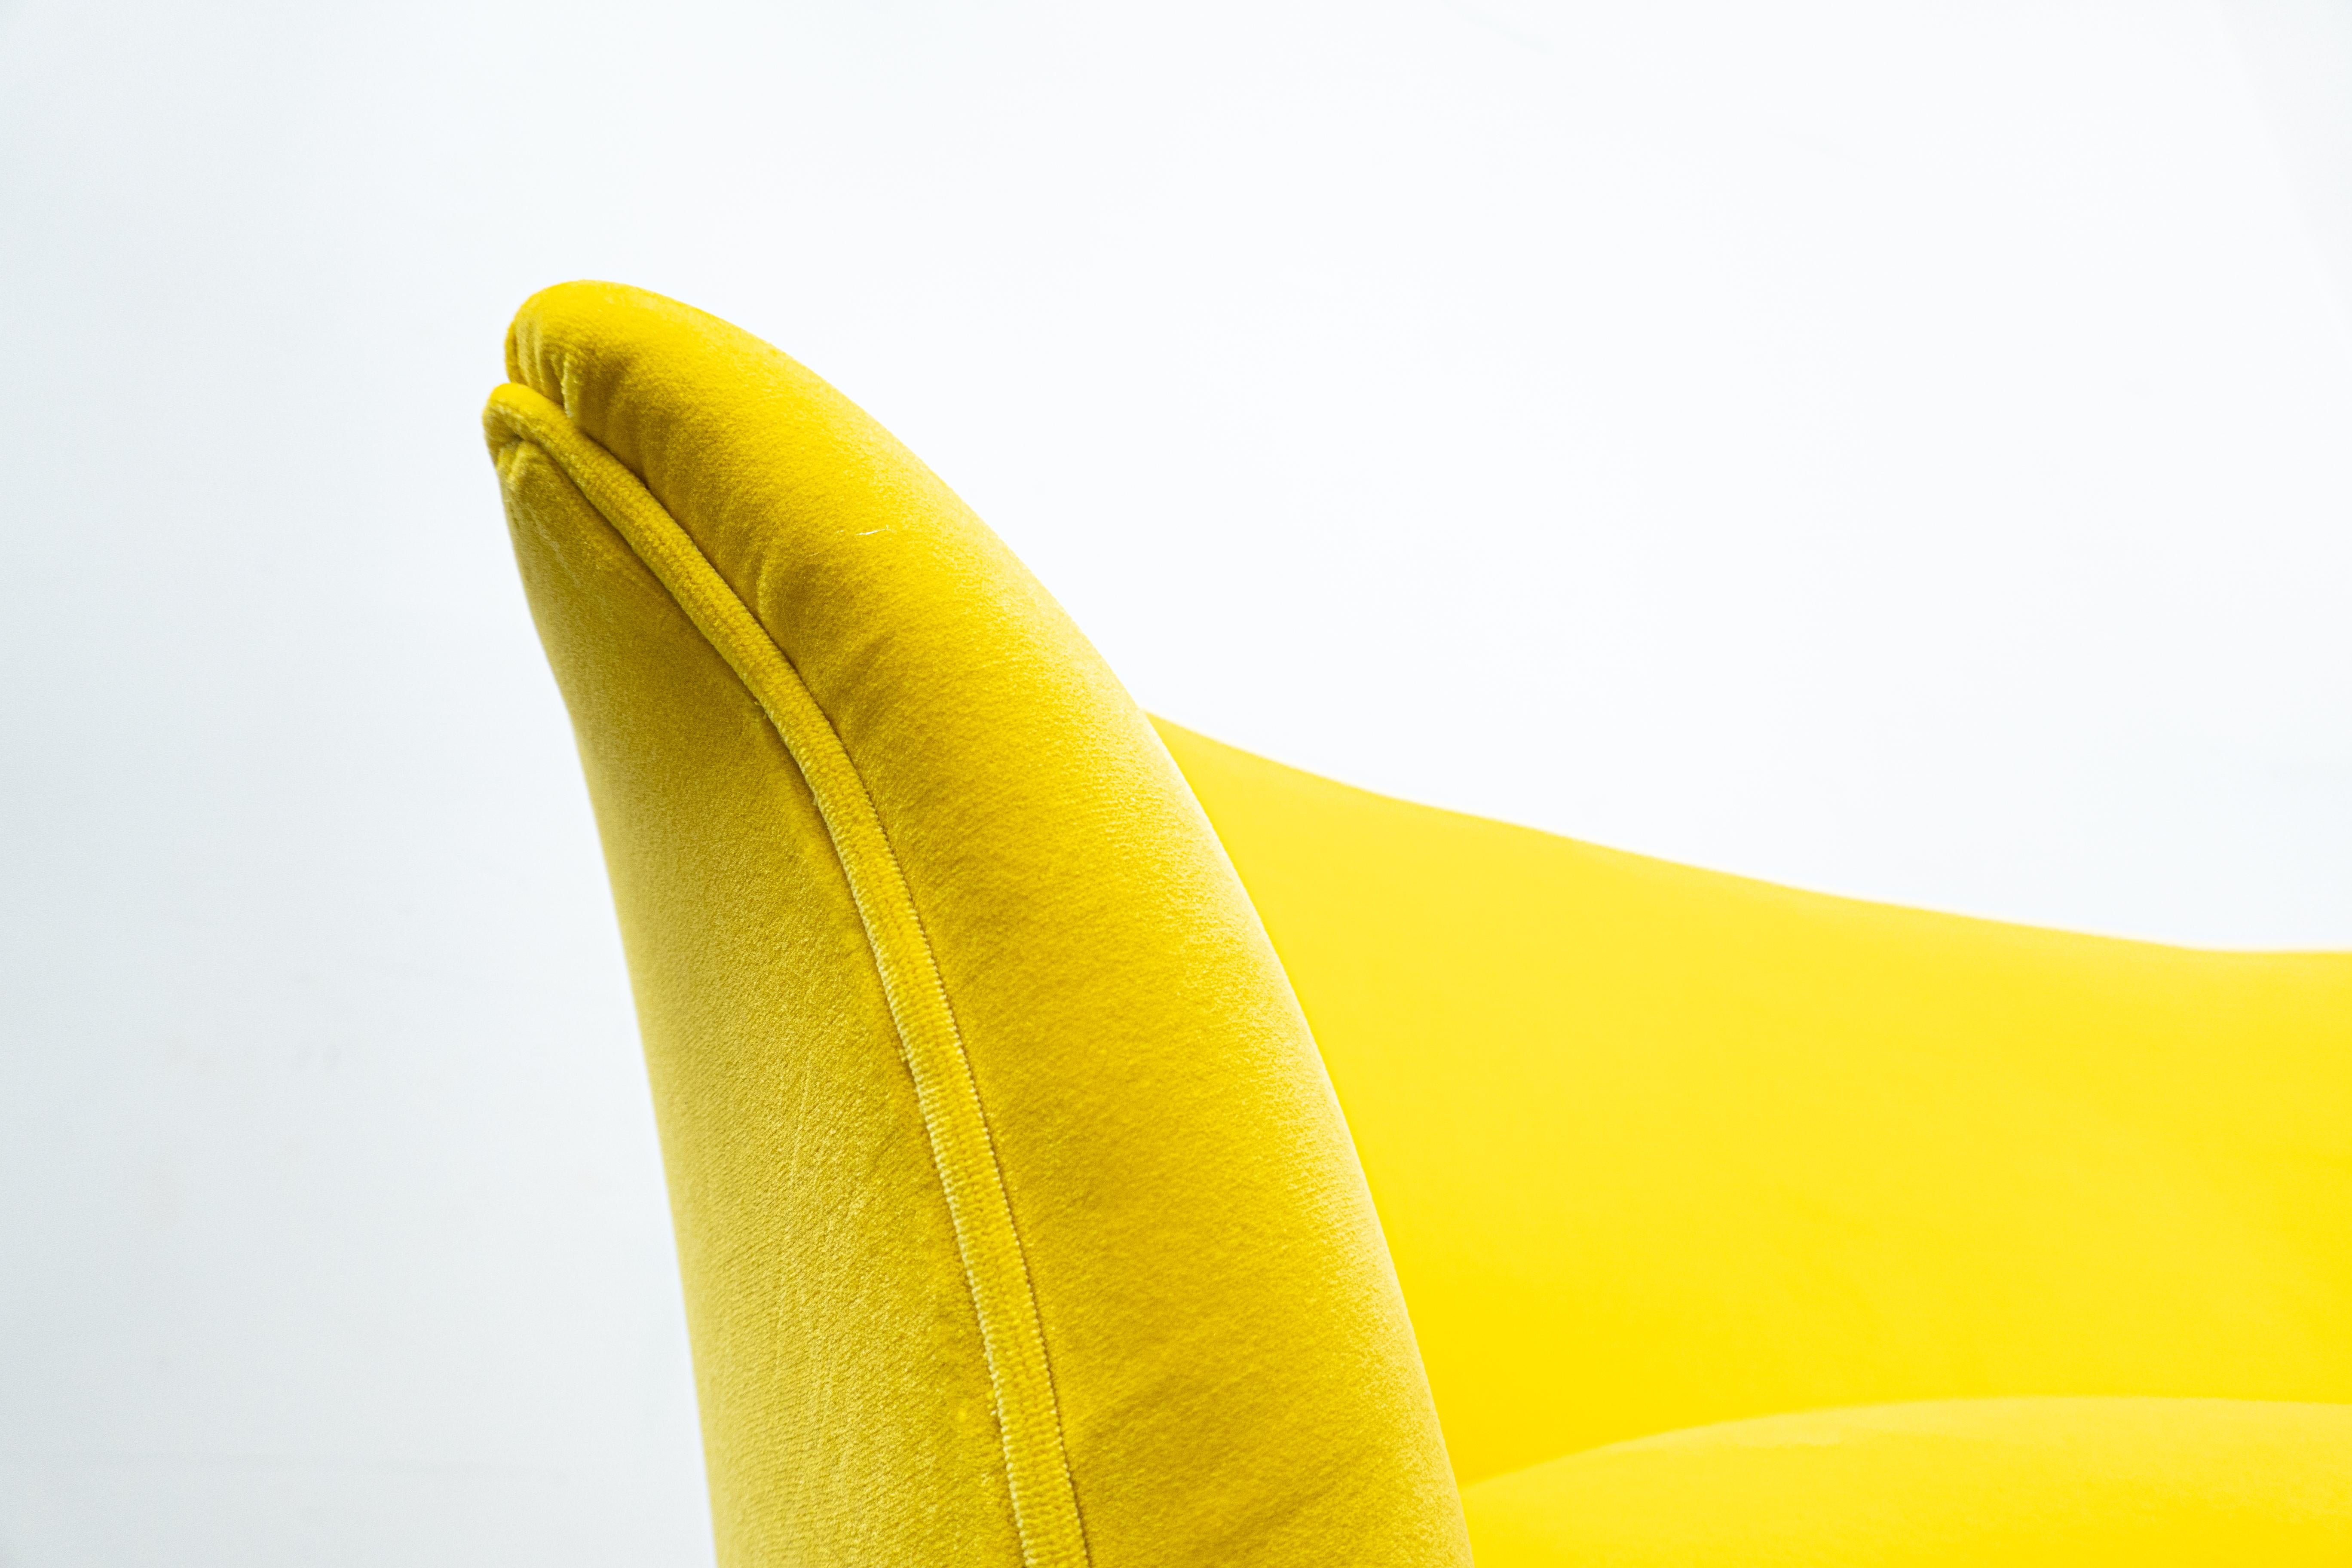 Mid-Century Modern Italian yellow fabric sofa, 1960s
European 
Reupholstered.